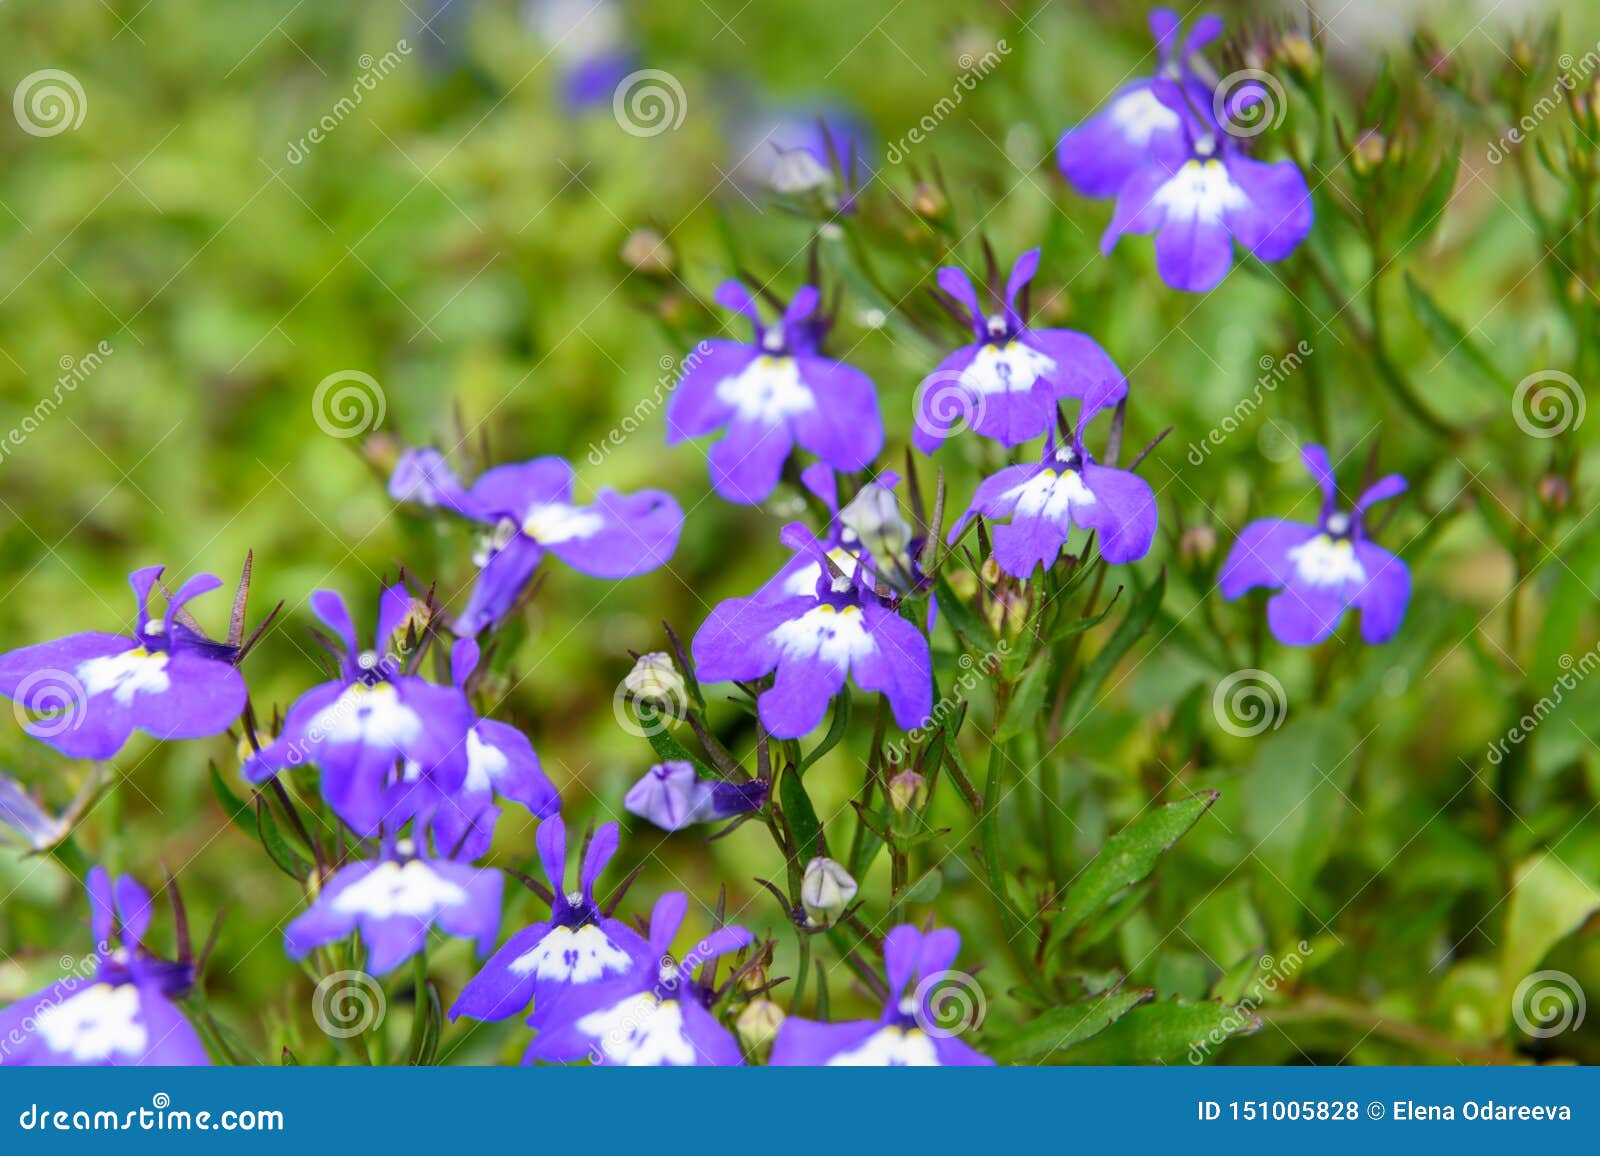 Violet Lobelia Erinus or Lobelia Sapphire Flowers Stock Photo - Image ...